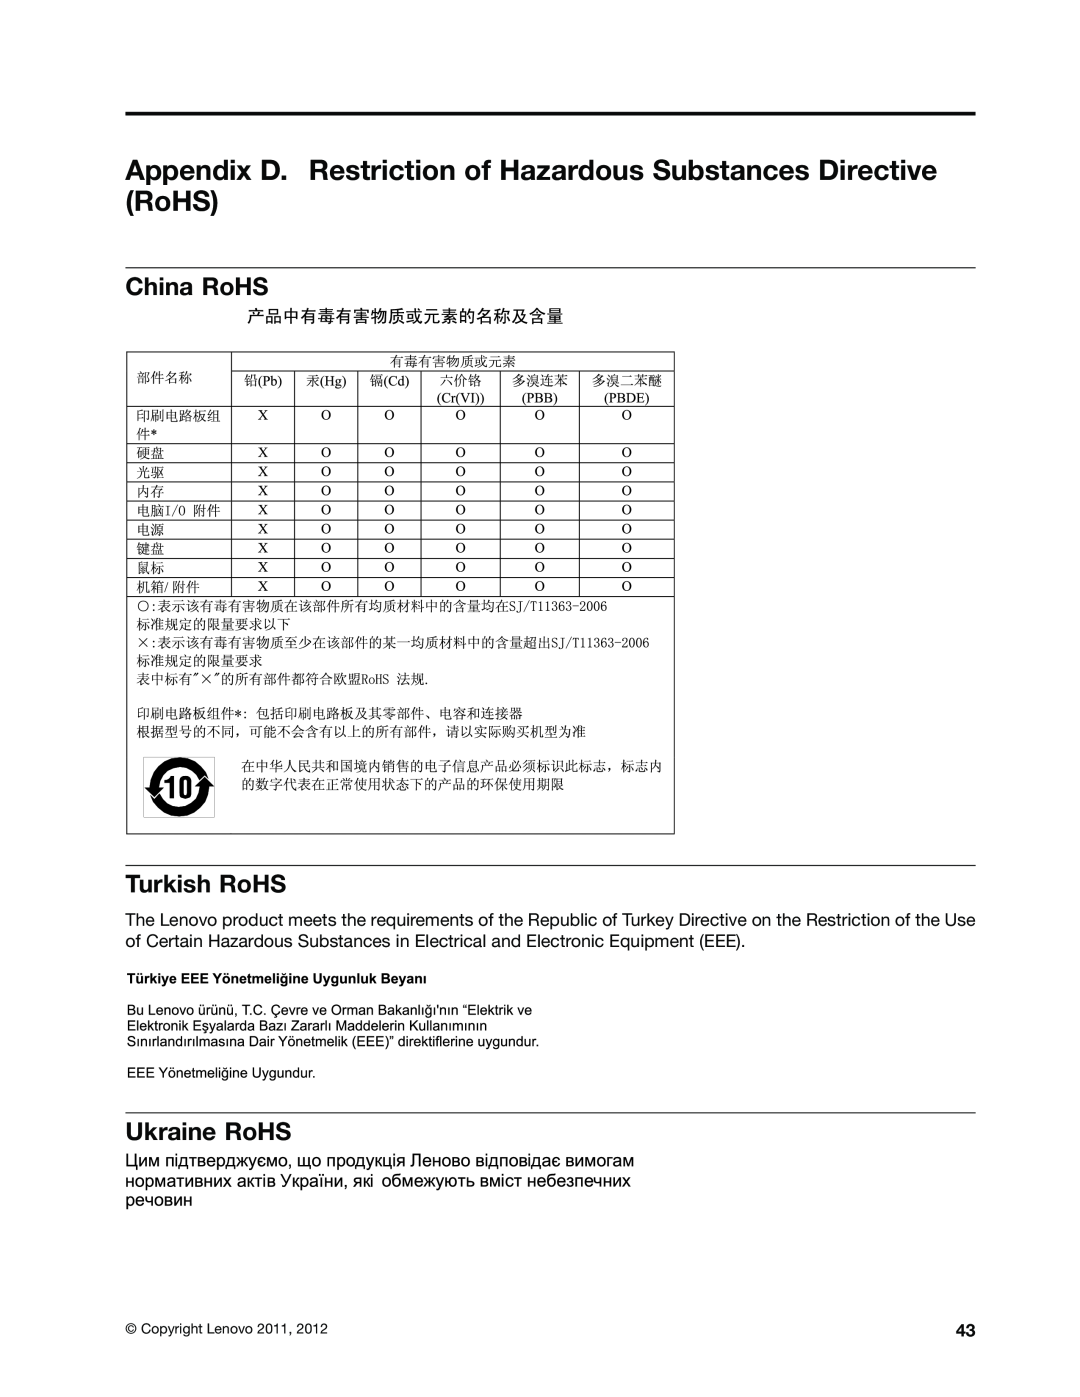 Lenovo B470E manual Appendix D. Restriction of Hazardous Substances Directive RoHS, China RoHS Turkish RoHS, Ukraine RoHS 